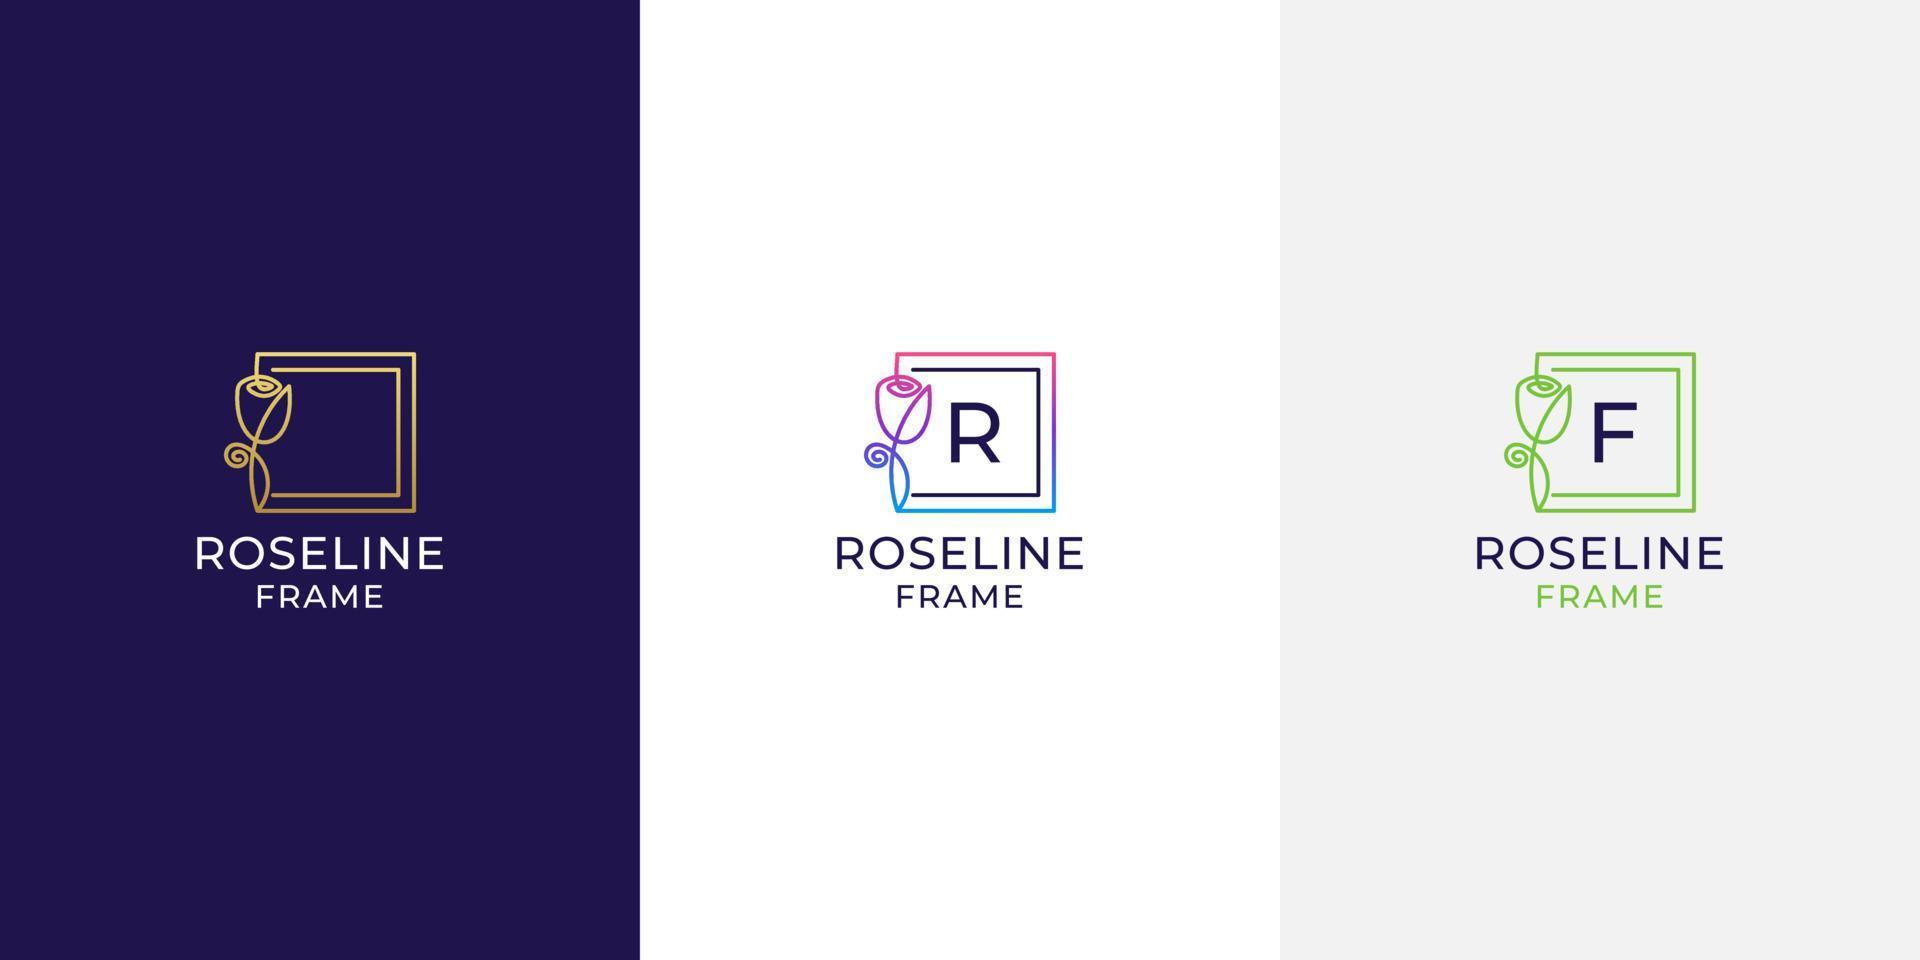 Rose frame-logo met letter rf en lijnkunststijl vector